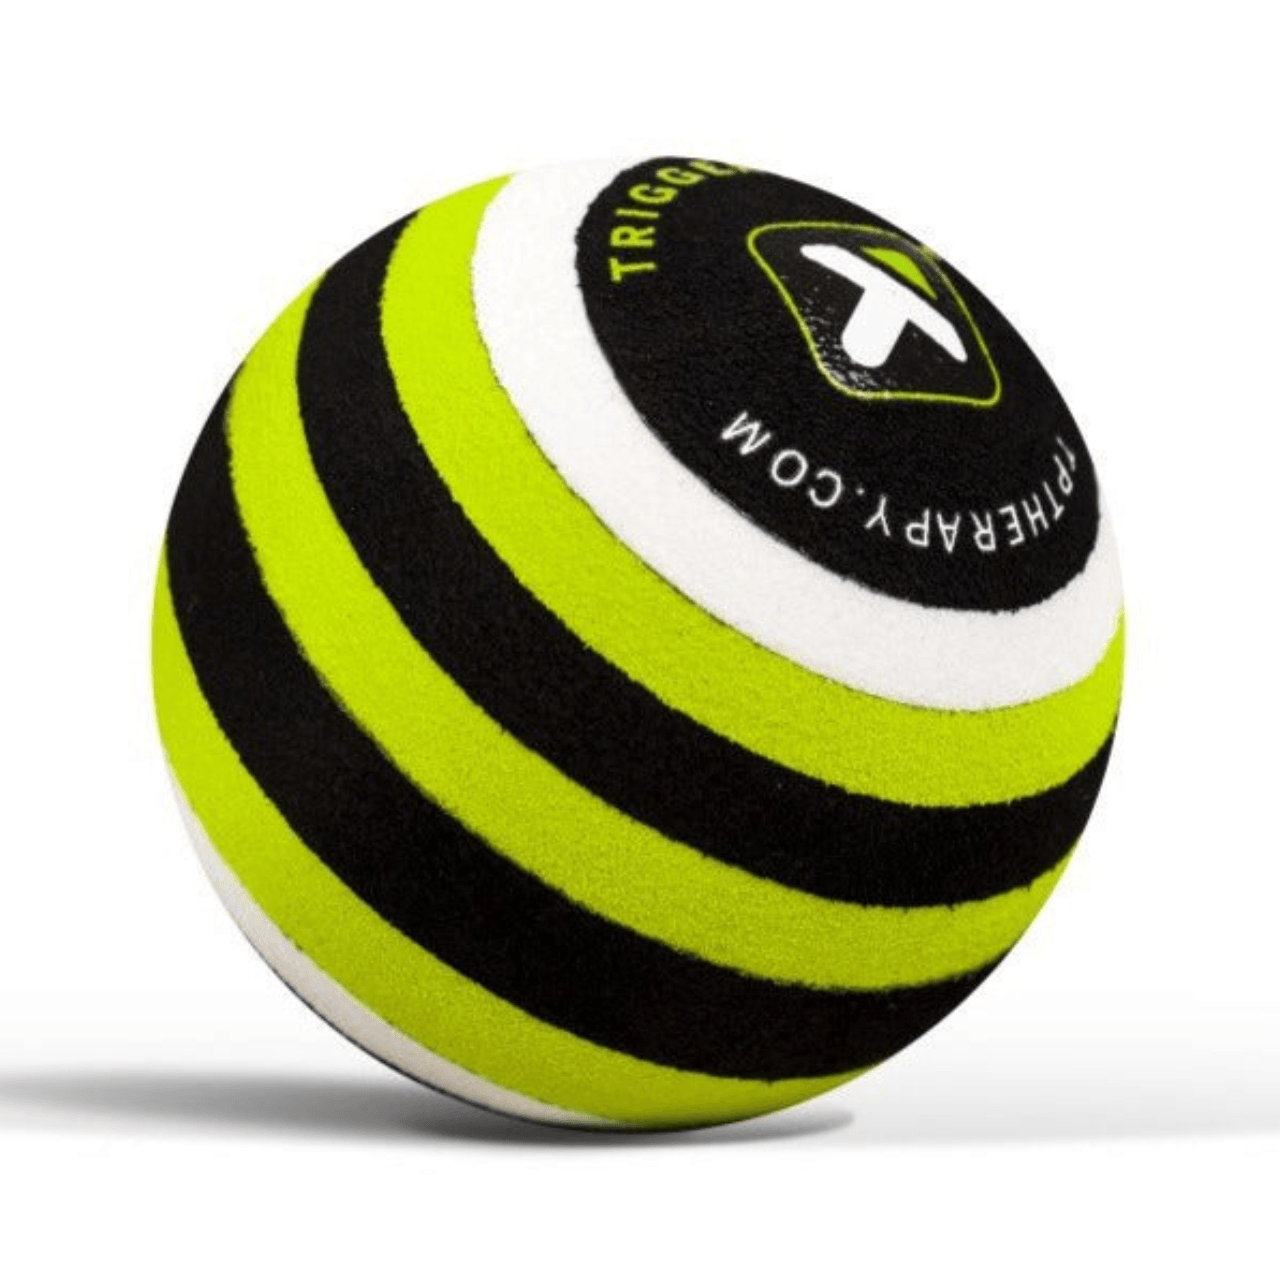 TriggerPoint MB1 Massage Ball (6.6cm Diameter) - The Sweat Shop